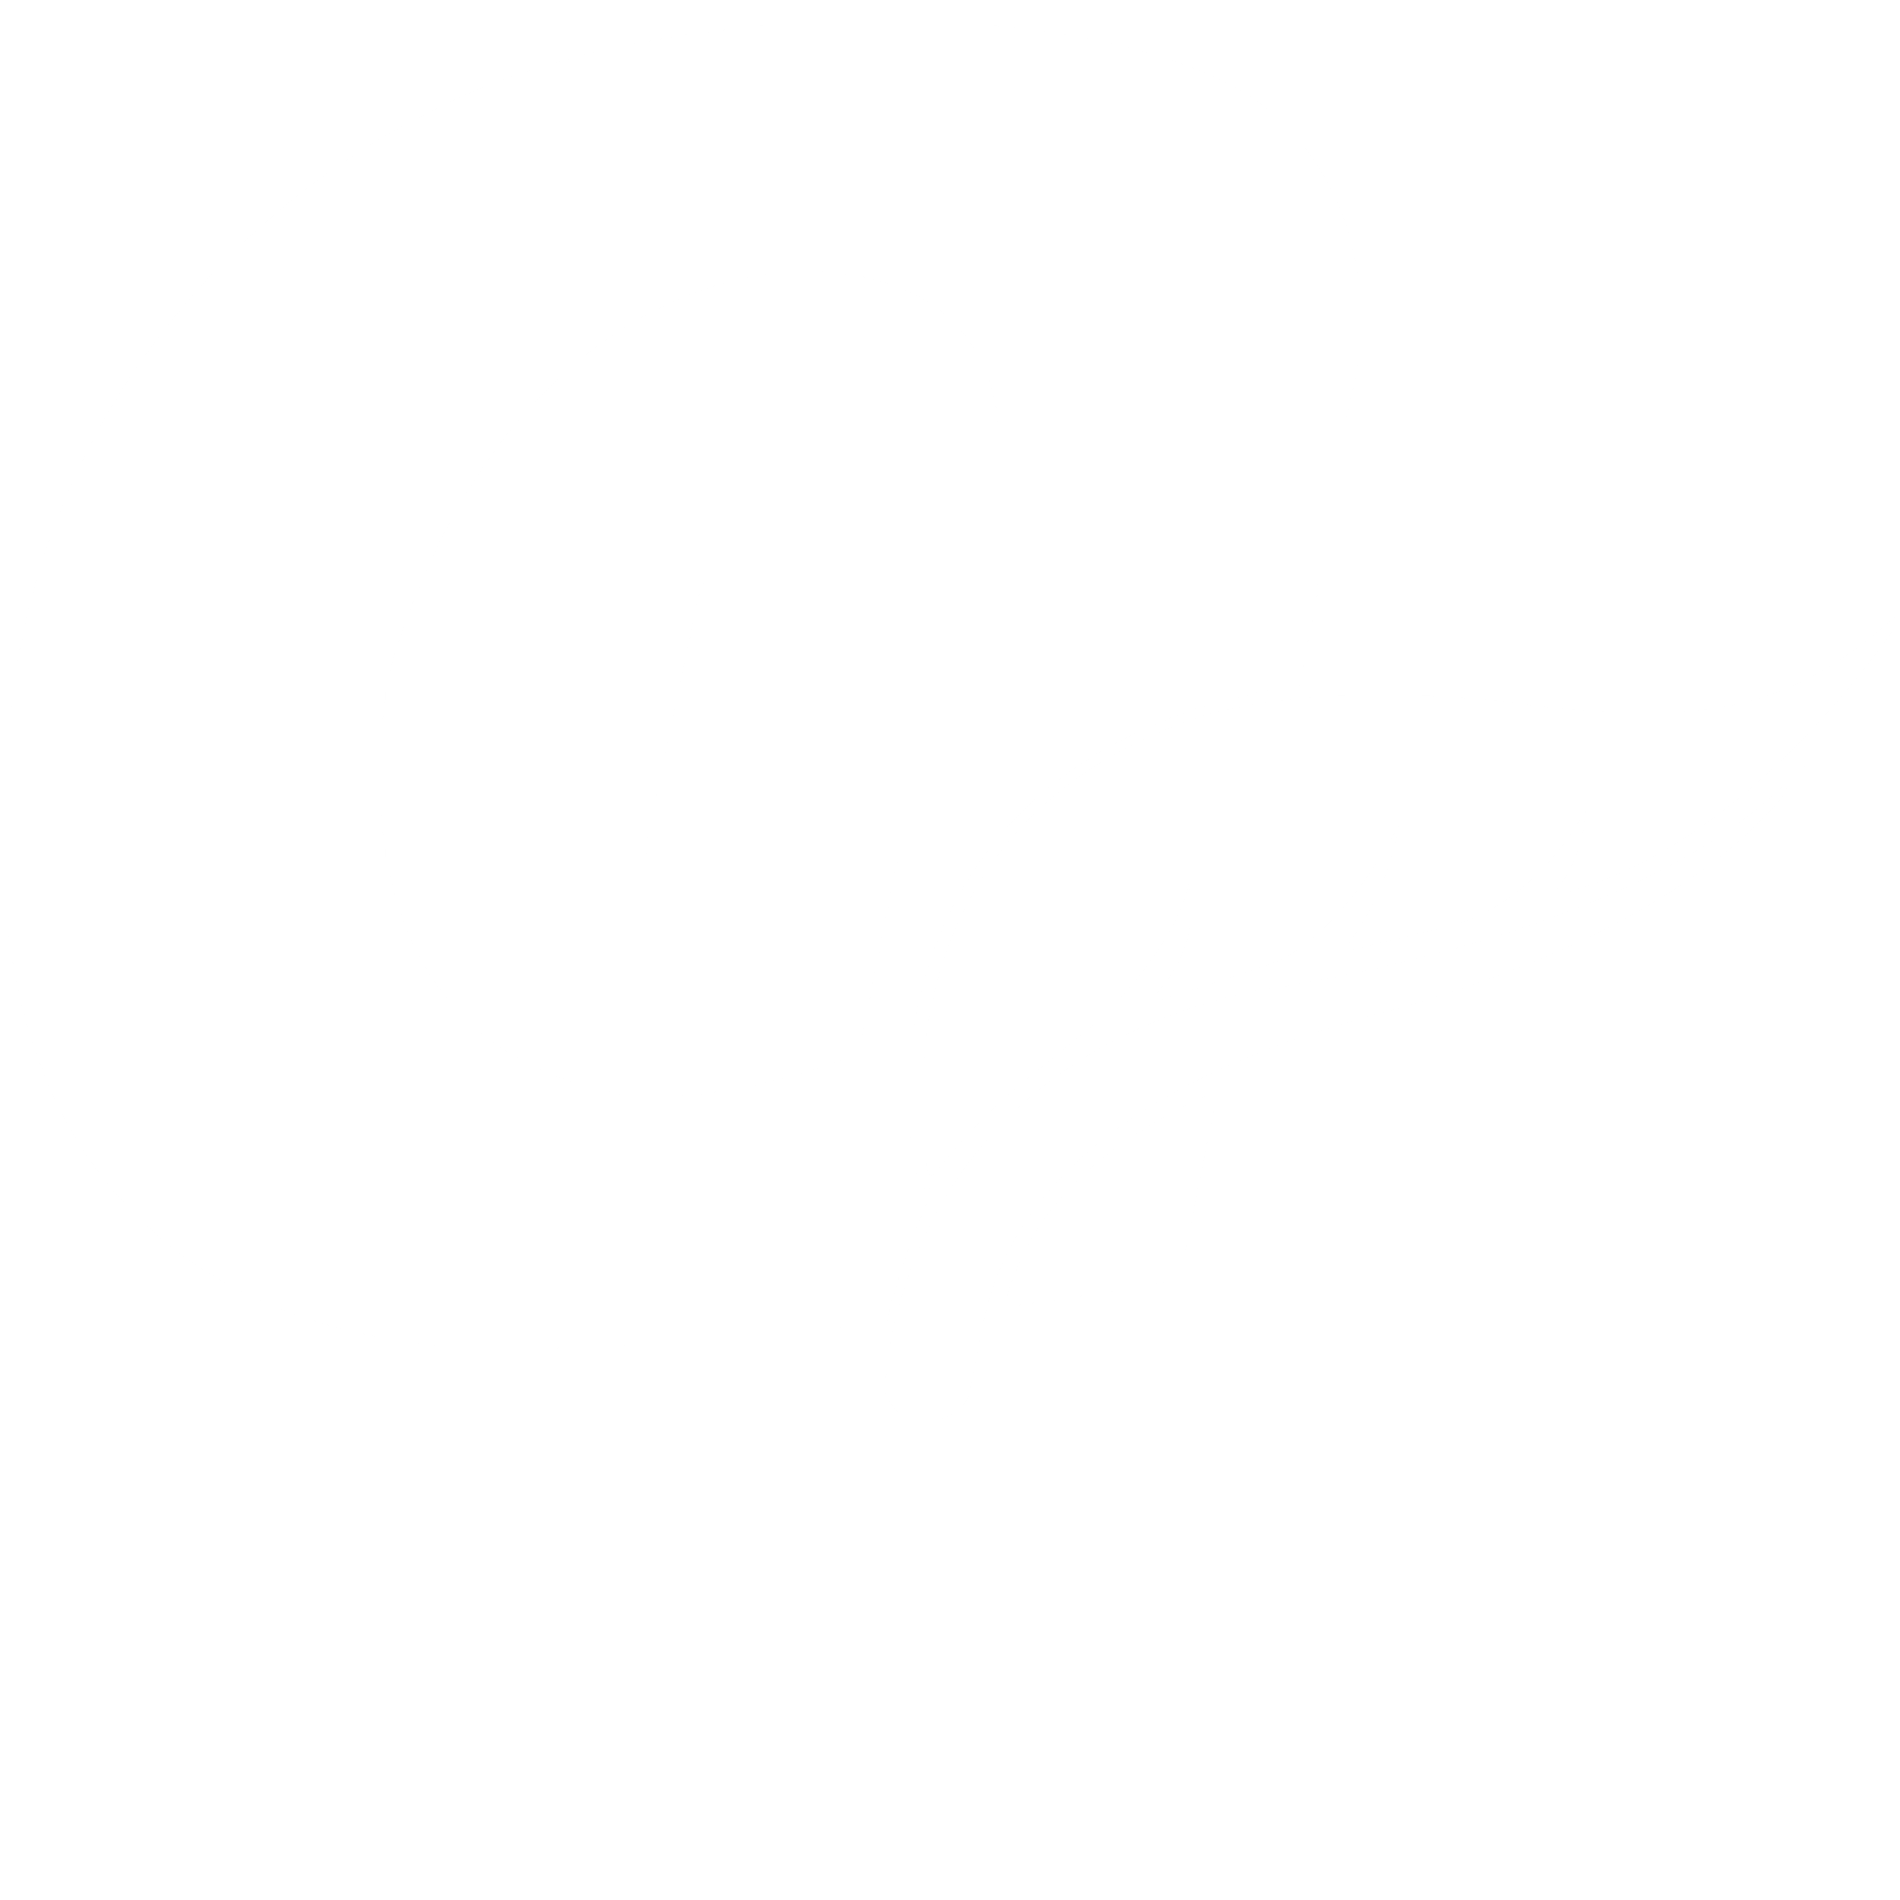 Green Industry certificate